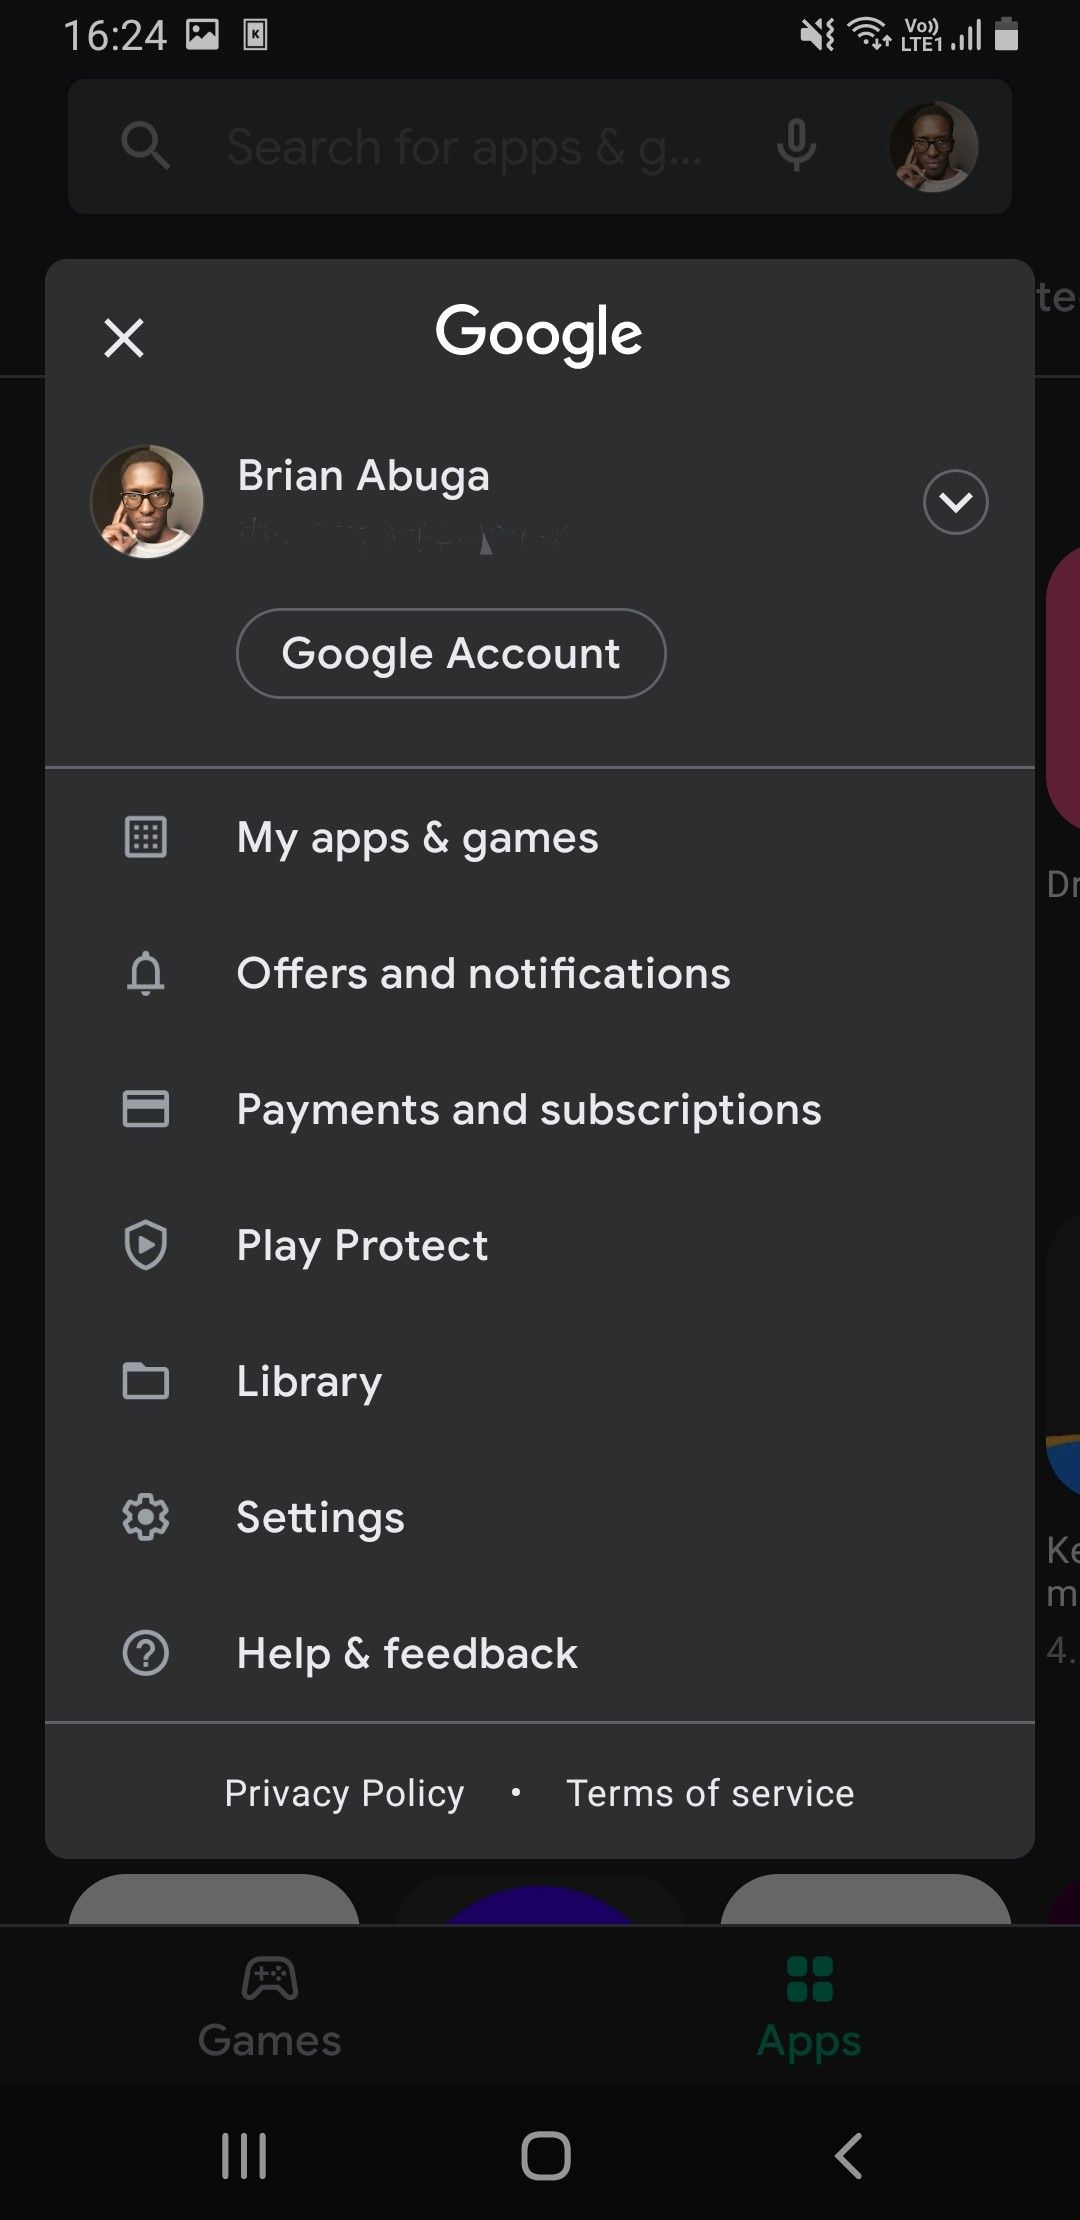 Google Play Store menu in dark mode